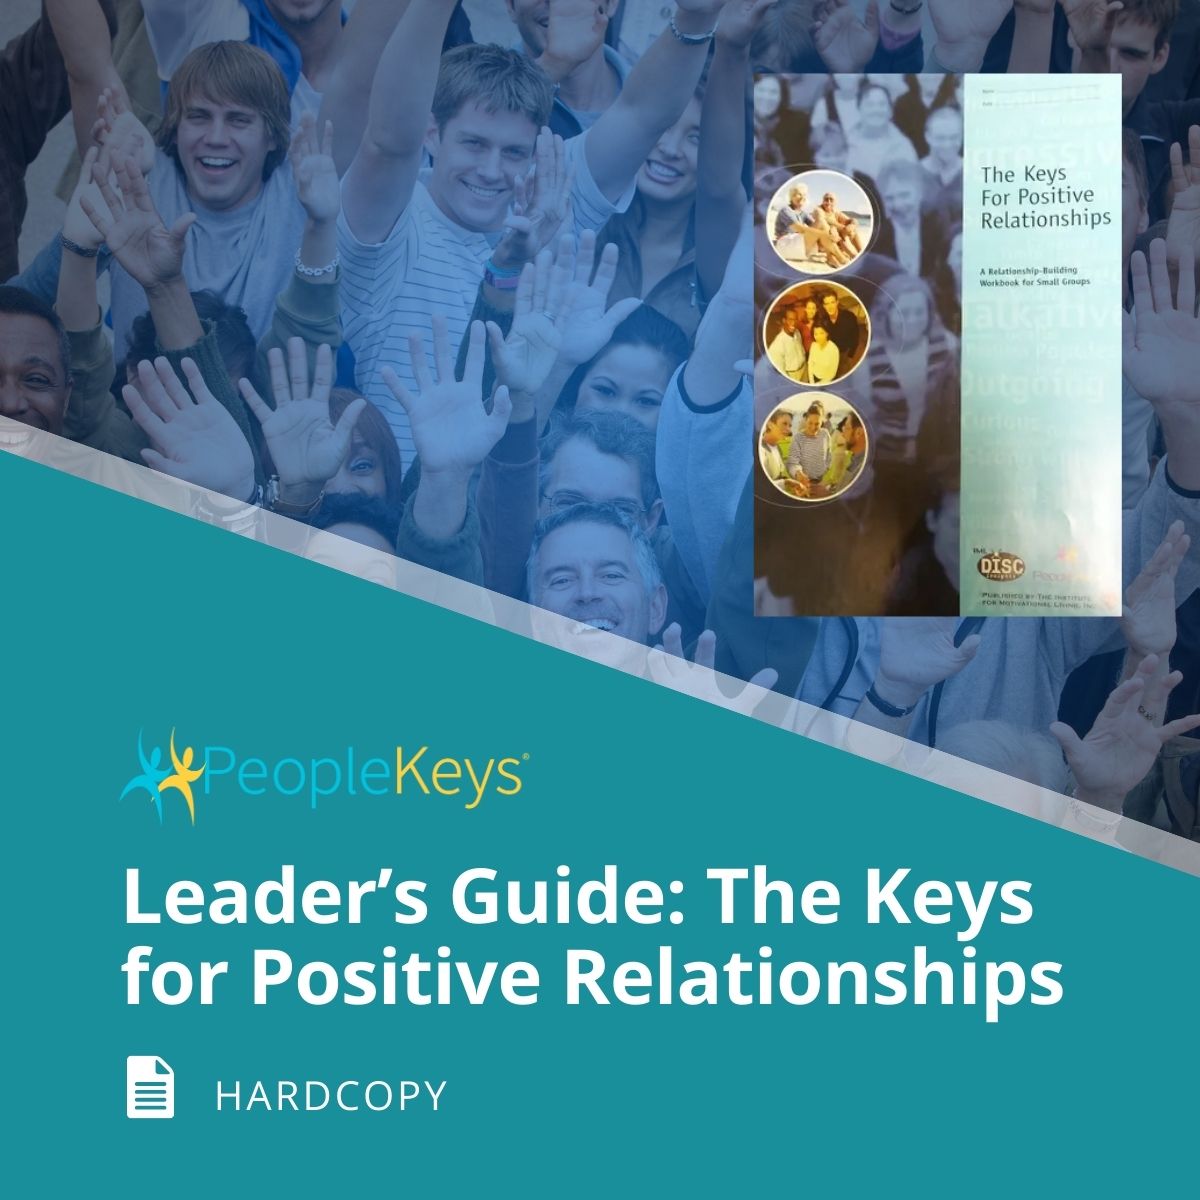 Leader's Guide: The Keys for Positive Relationships (Hardcopy)